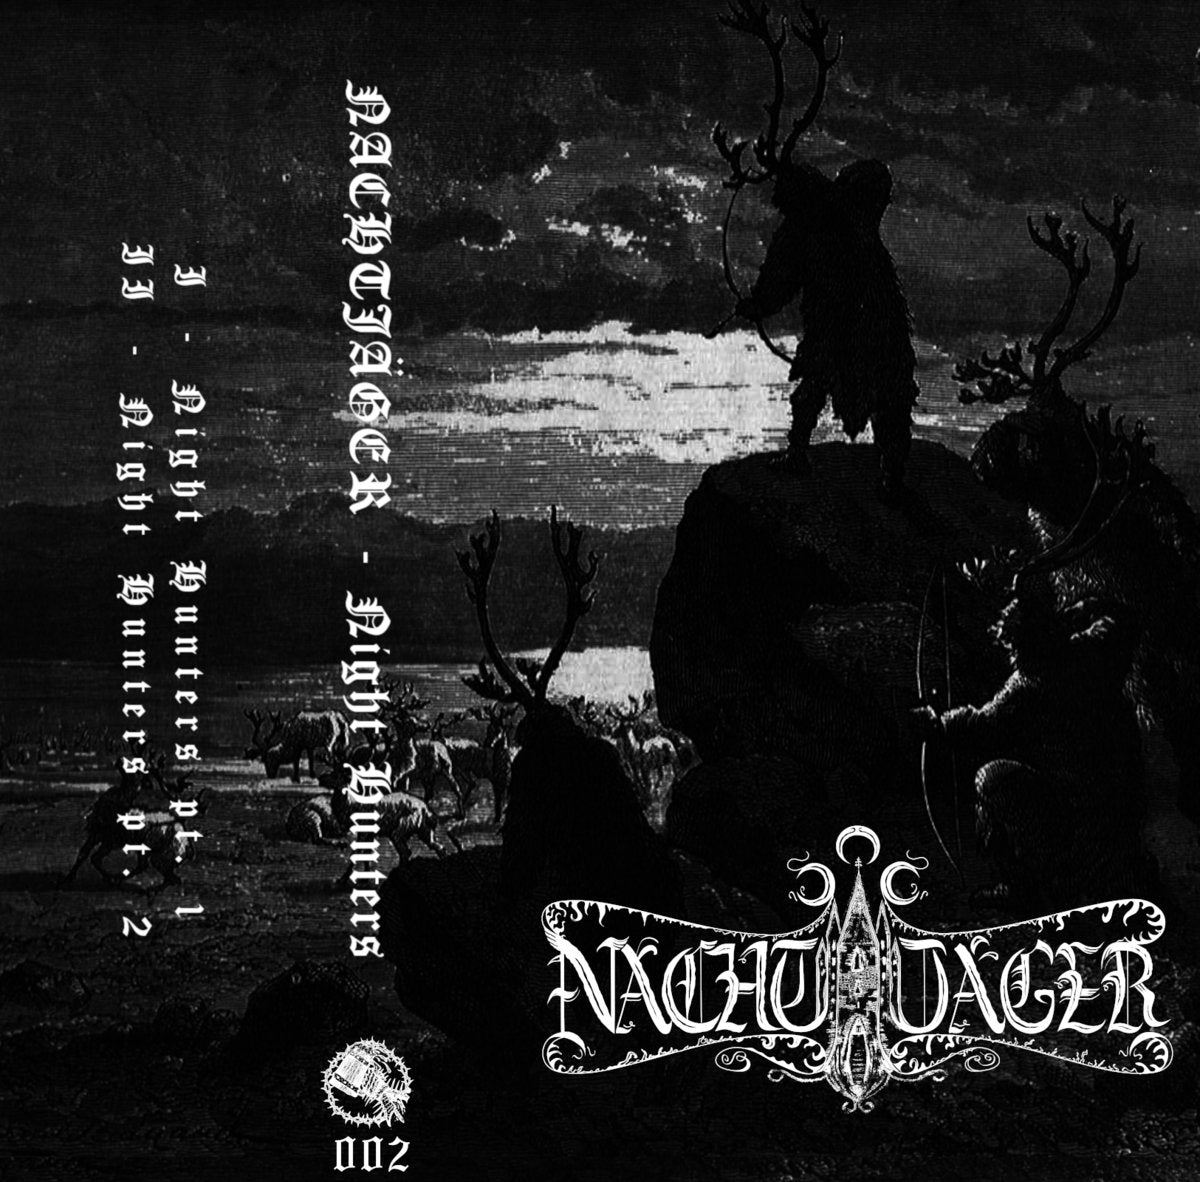 [SOLD OUT] NACHTJÄGER "Night Hunters" cassette tape (lim.50)